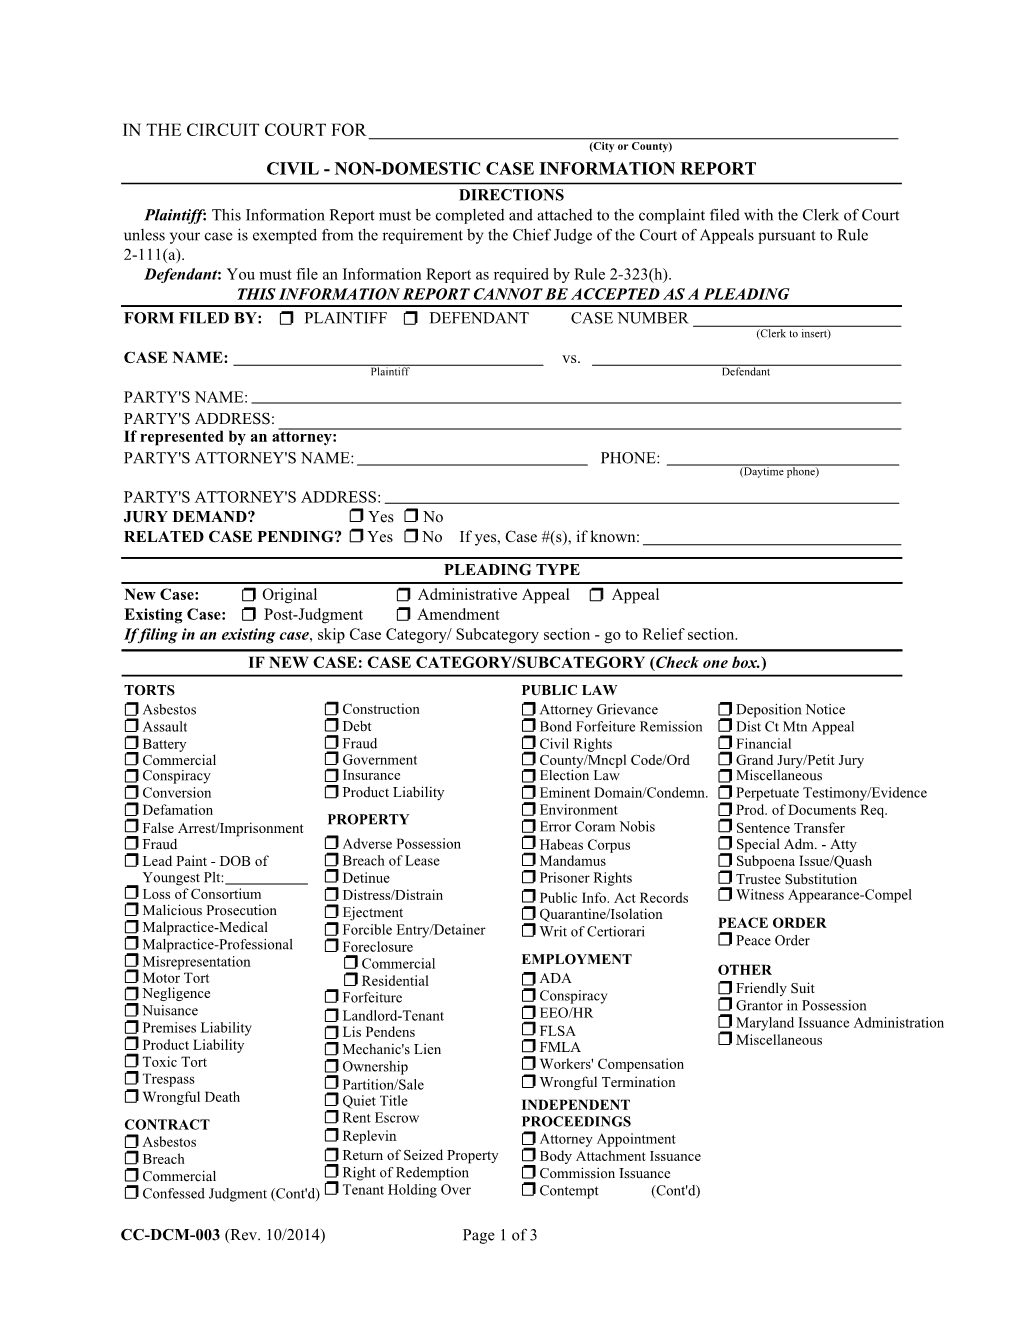 Circuit Court -- Civil Non-Domestic Case Information Report Form